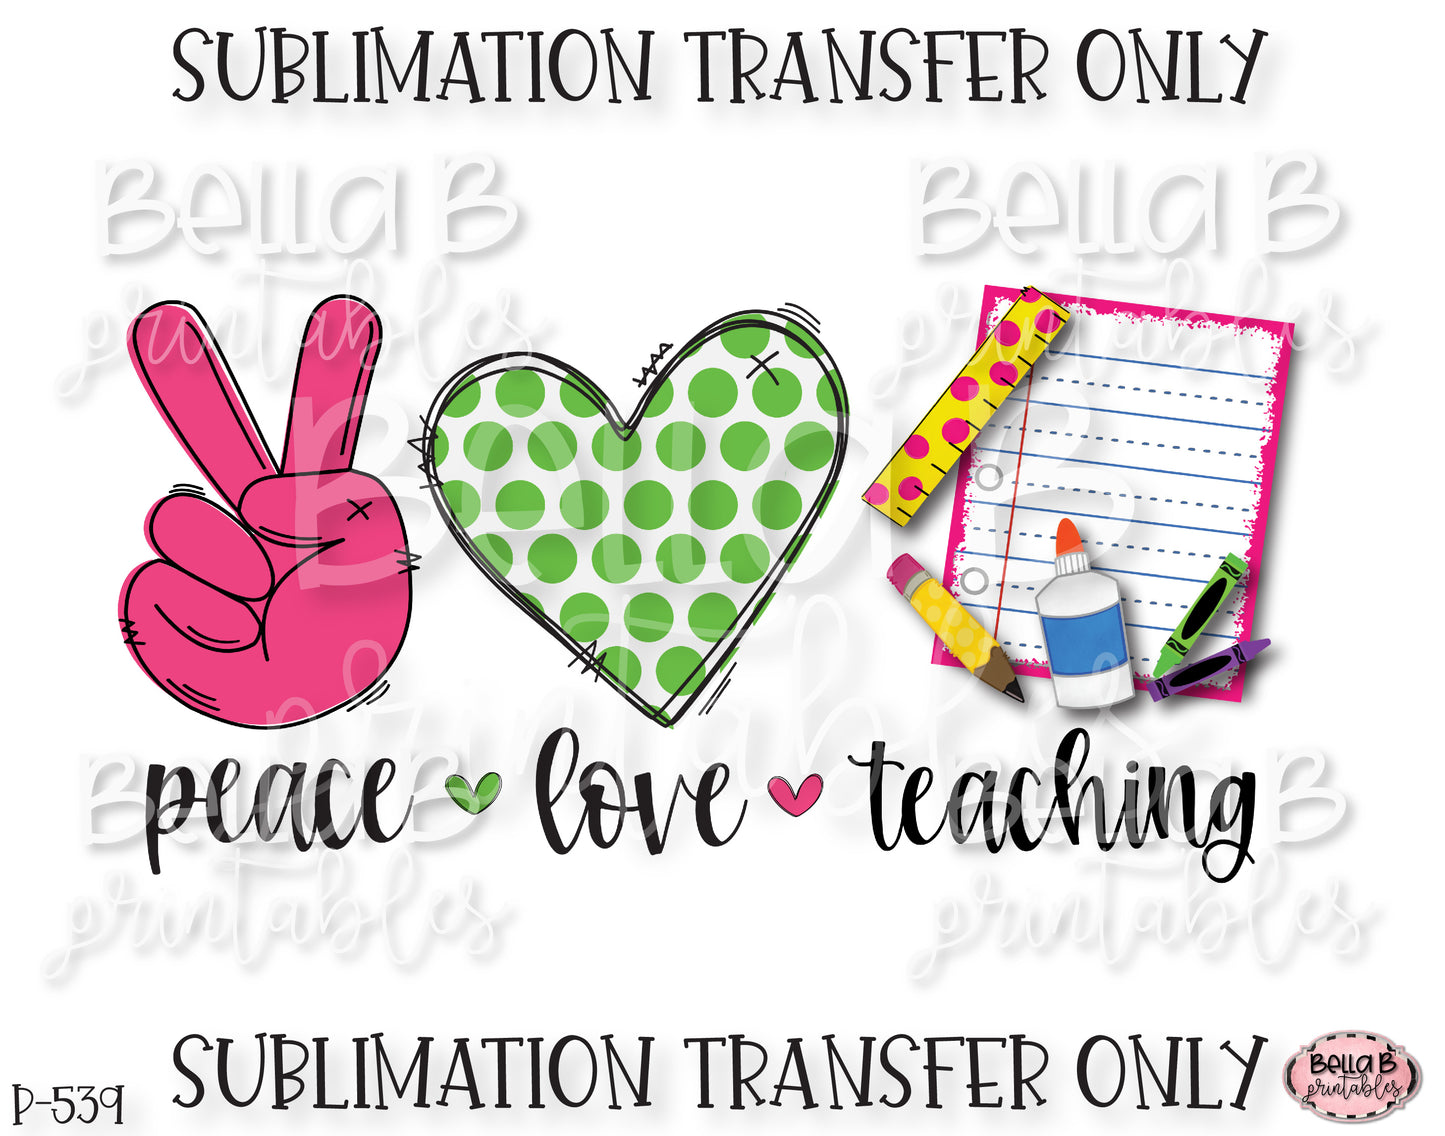 Peace Love Teaching Sublimation Transfer, Ready To Press, Heat Press Transfer, Sublimation Print